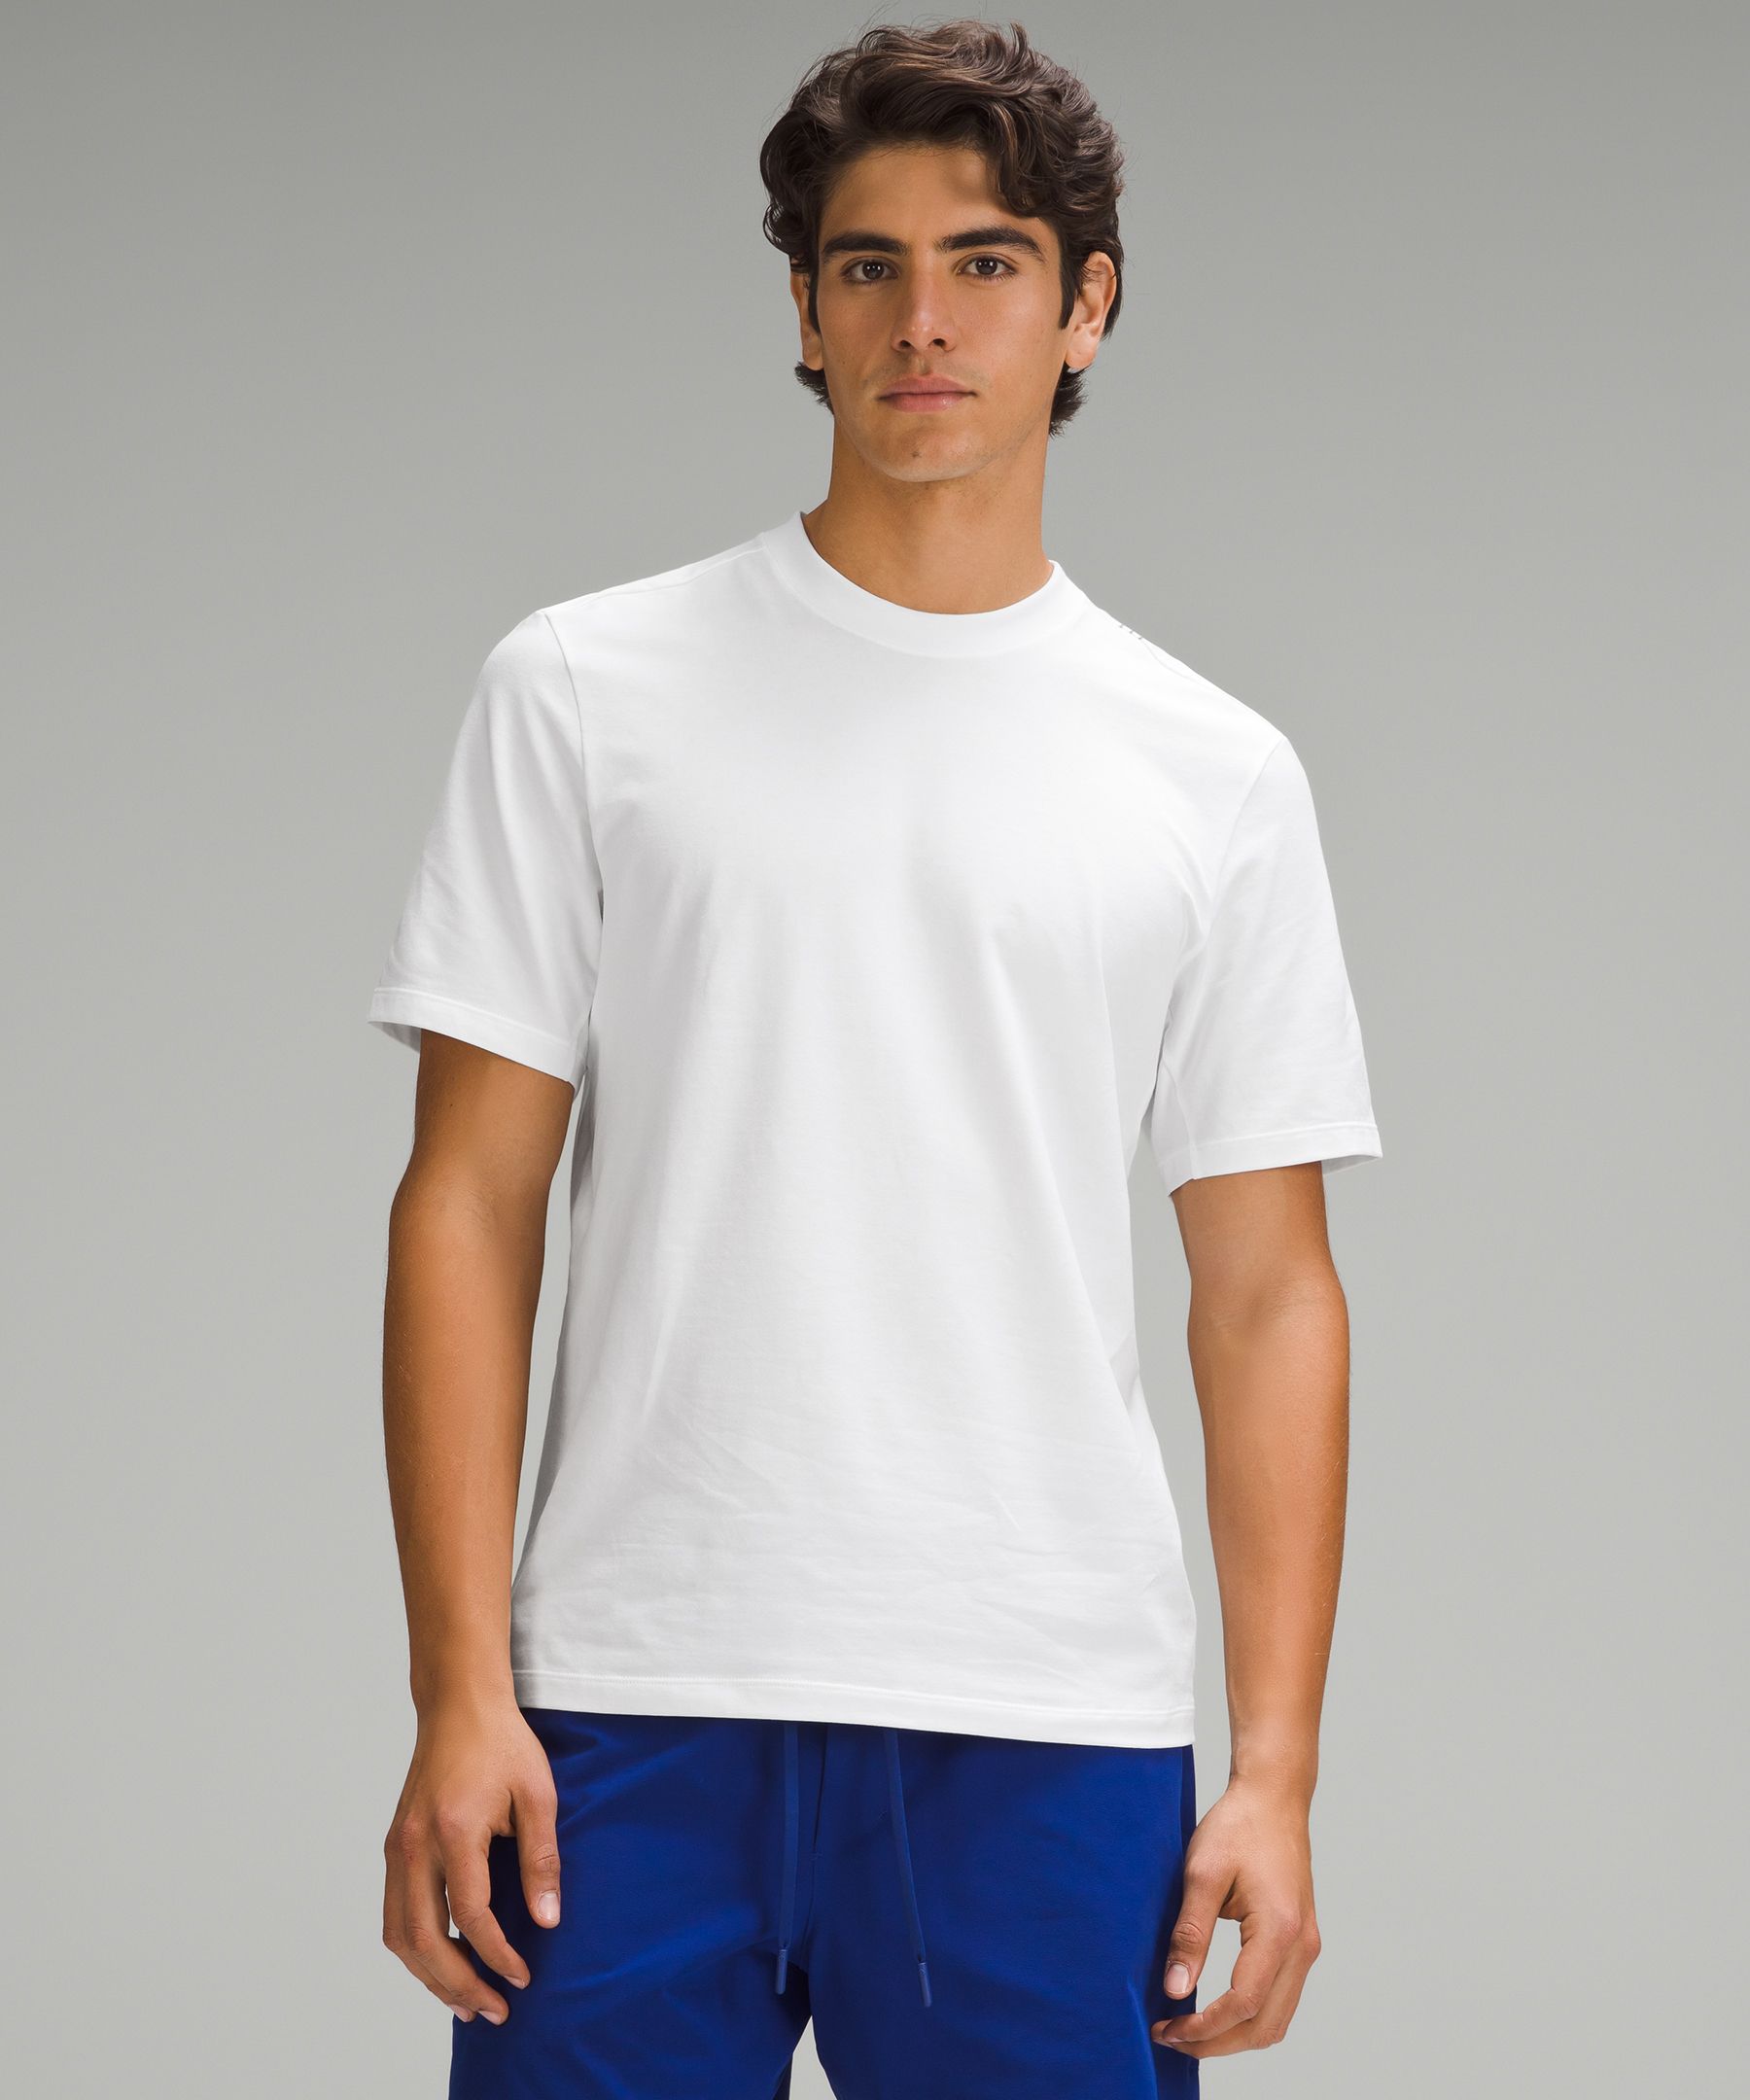 Lululemon - Metal Vent Tech Printed Stretch-Jersey T-Shirt - White Lululemon